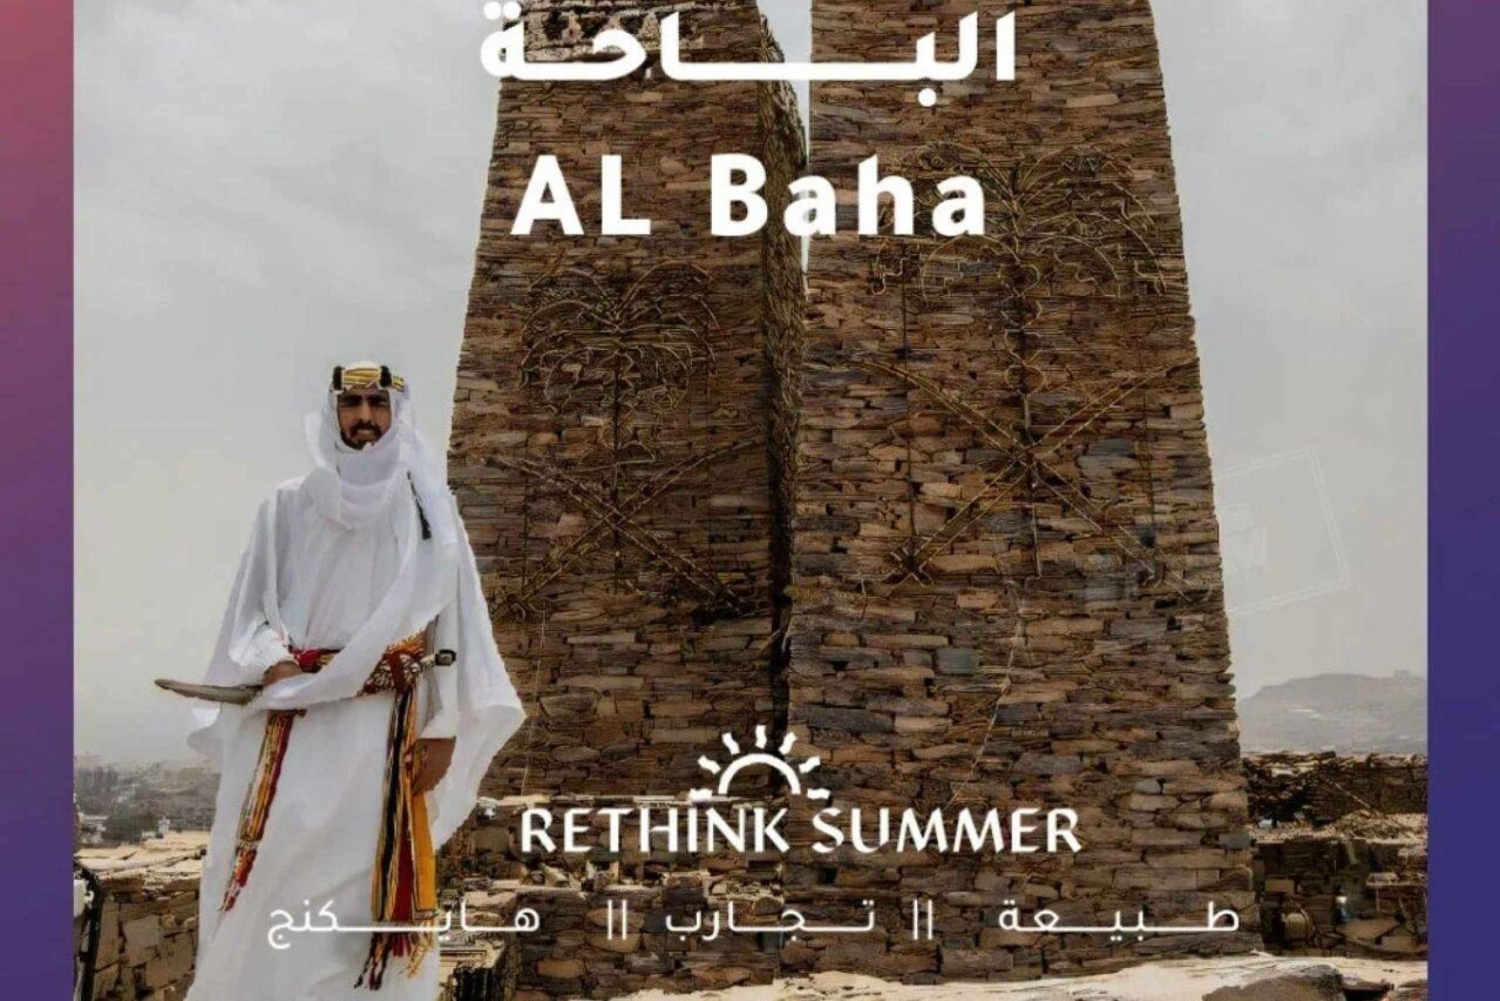 Al Baha 3 daagse trip